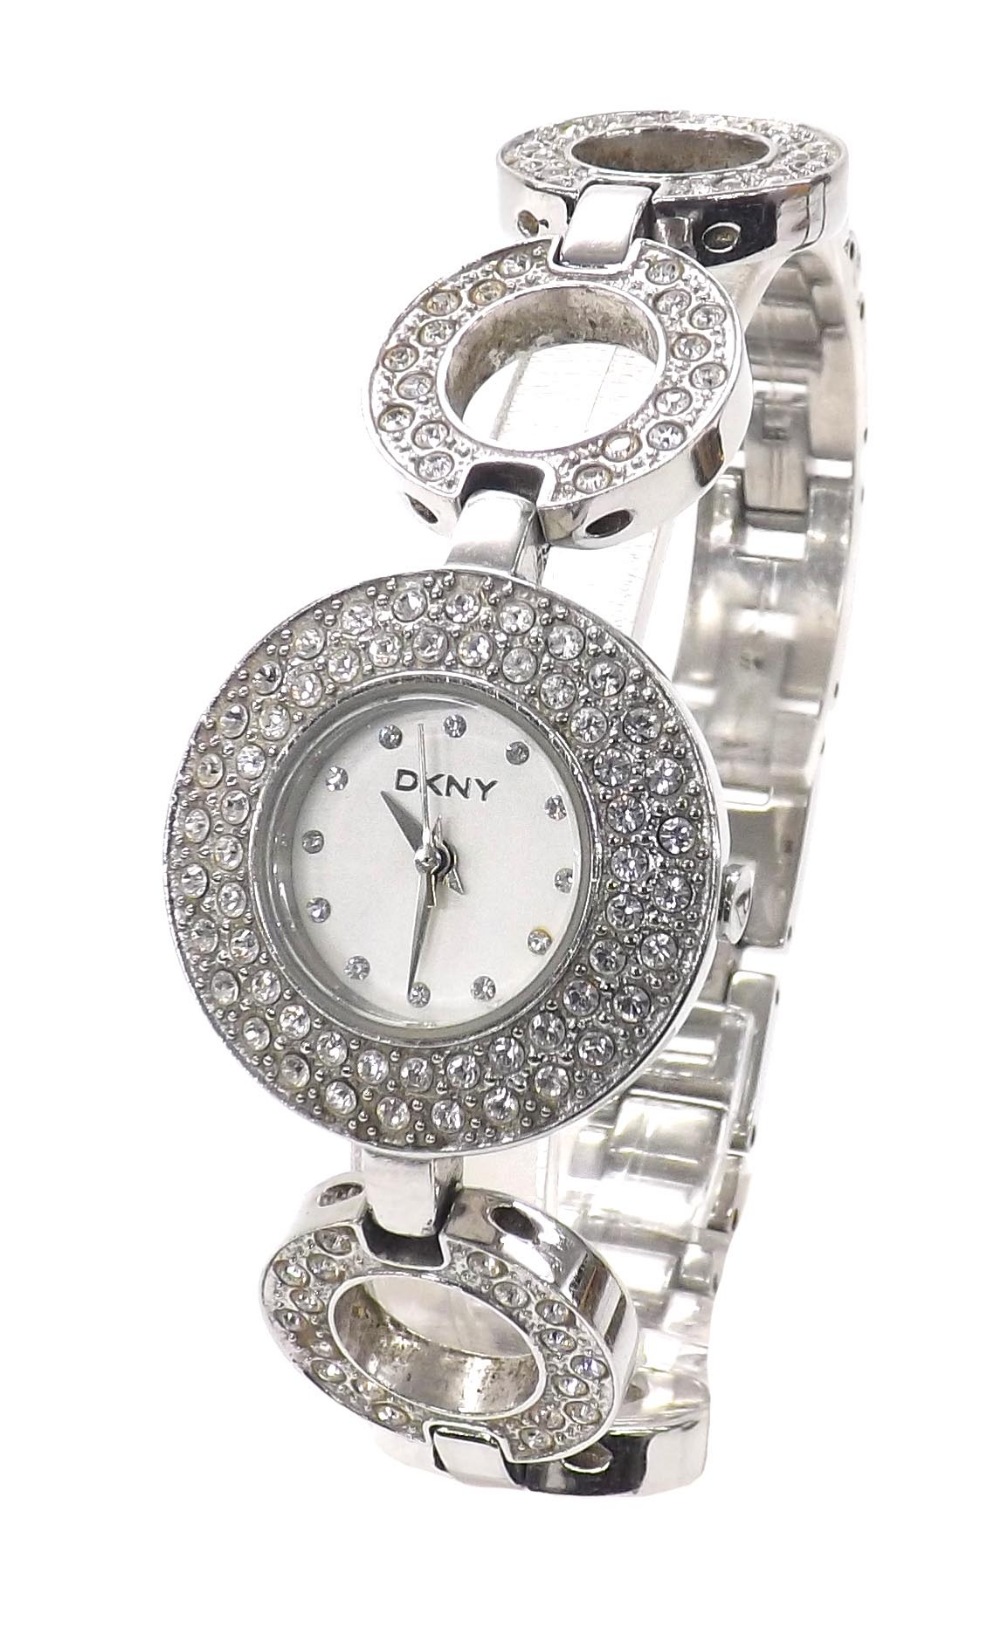 DKNY stone set stainless steel lady's designer bracelet watch, quartz, 26mm (98P18Y) *DKNY box - Image 2 of 3